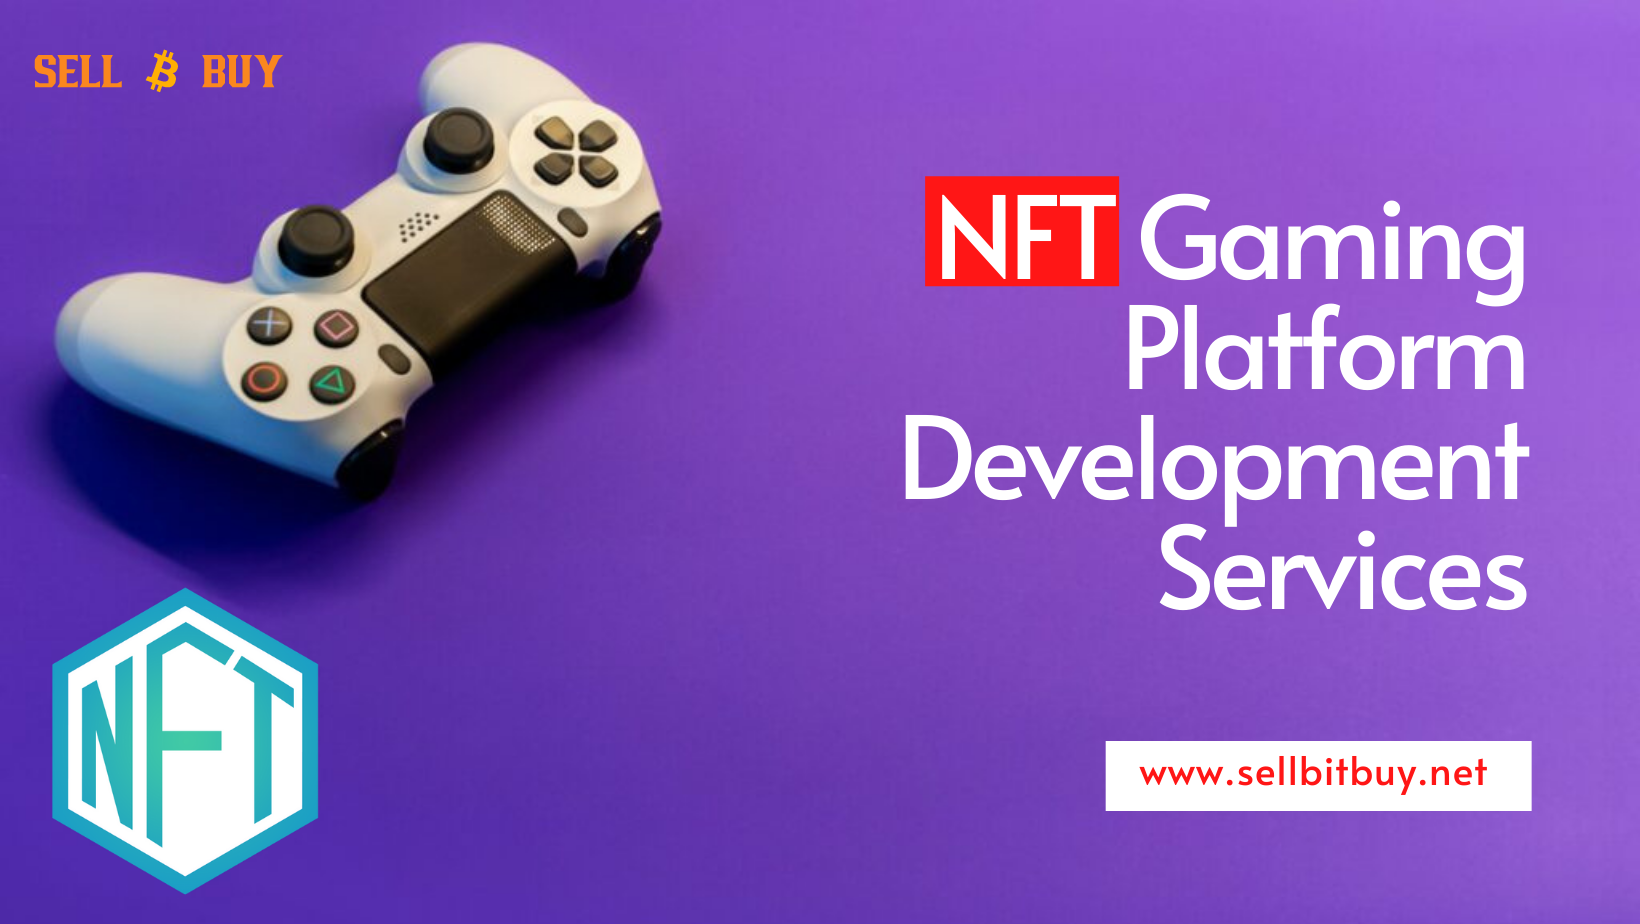 Article about NFT Gaming Platform Development Services